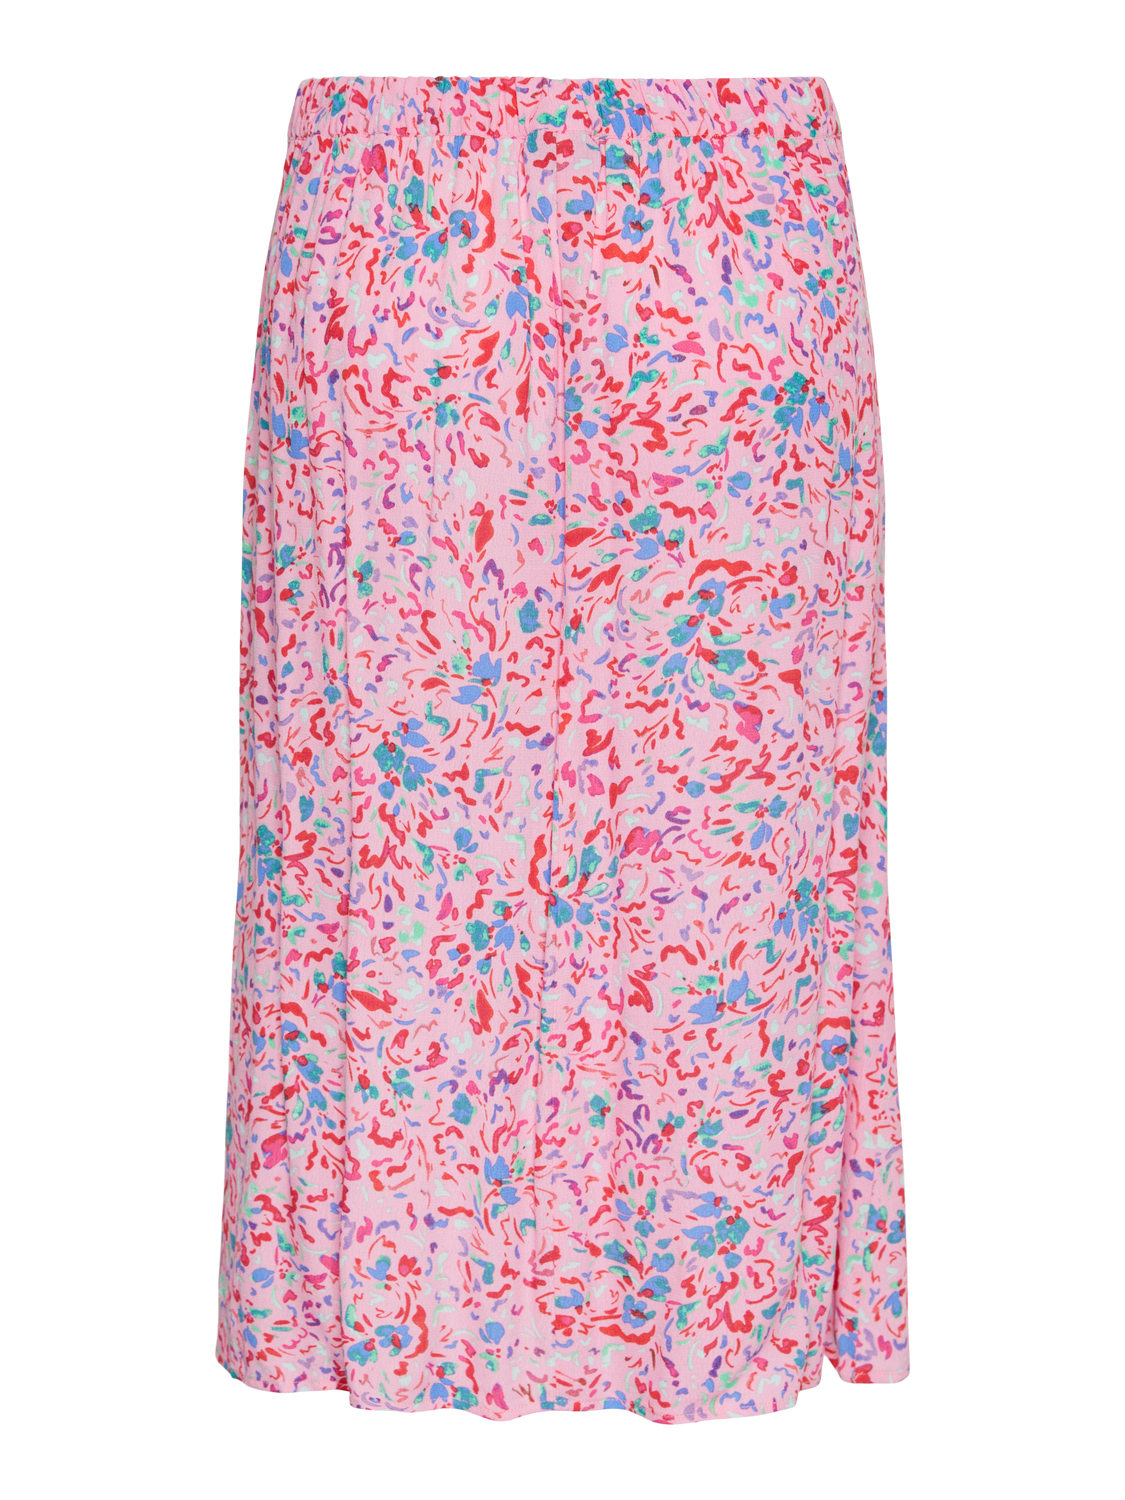 PCARINE Skirt - Prism Pink